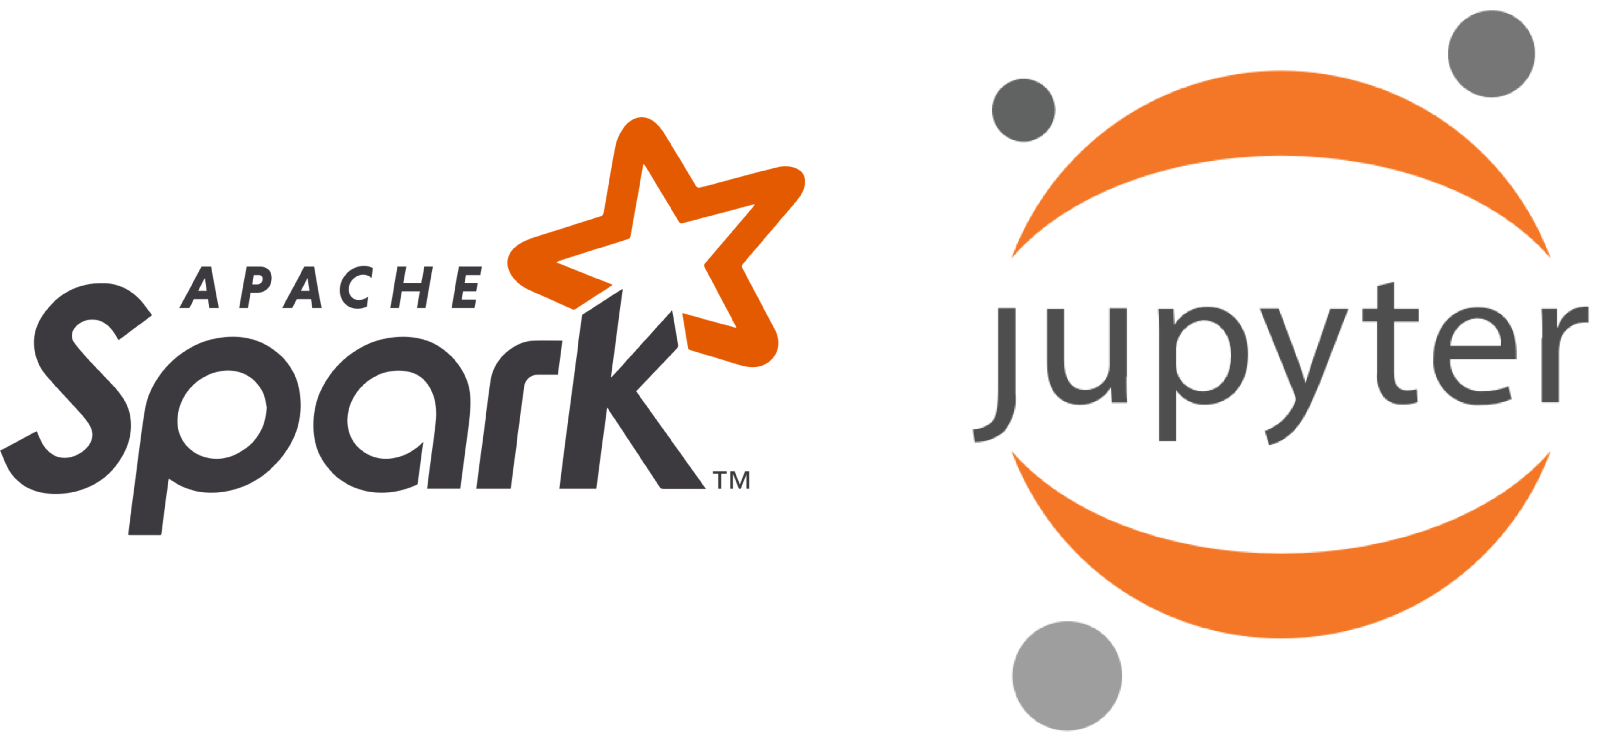 Jupyter Logo - IBM Brings Jupyter and Spark to the Mainframe